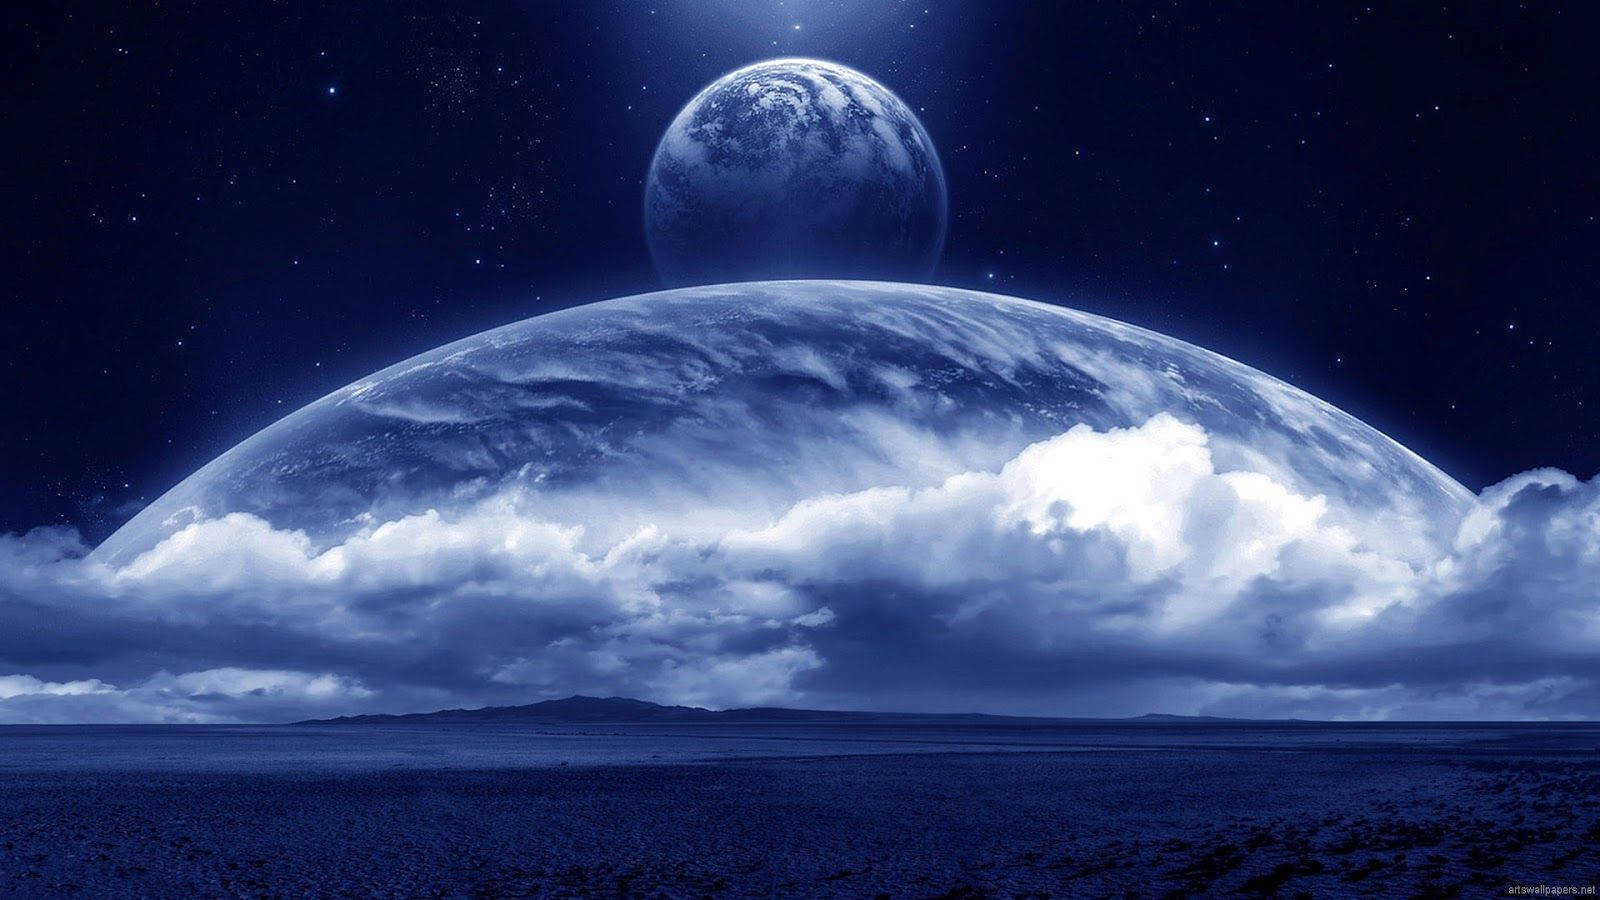 Glowing In The Night Sky, The Majestic Blue Moon Hangs Like A Beacon Of Light Wallpaper